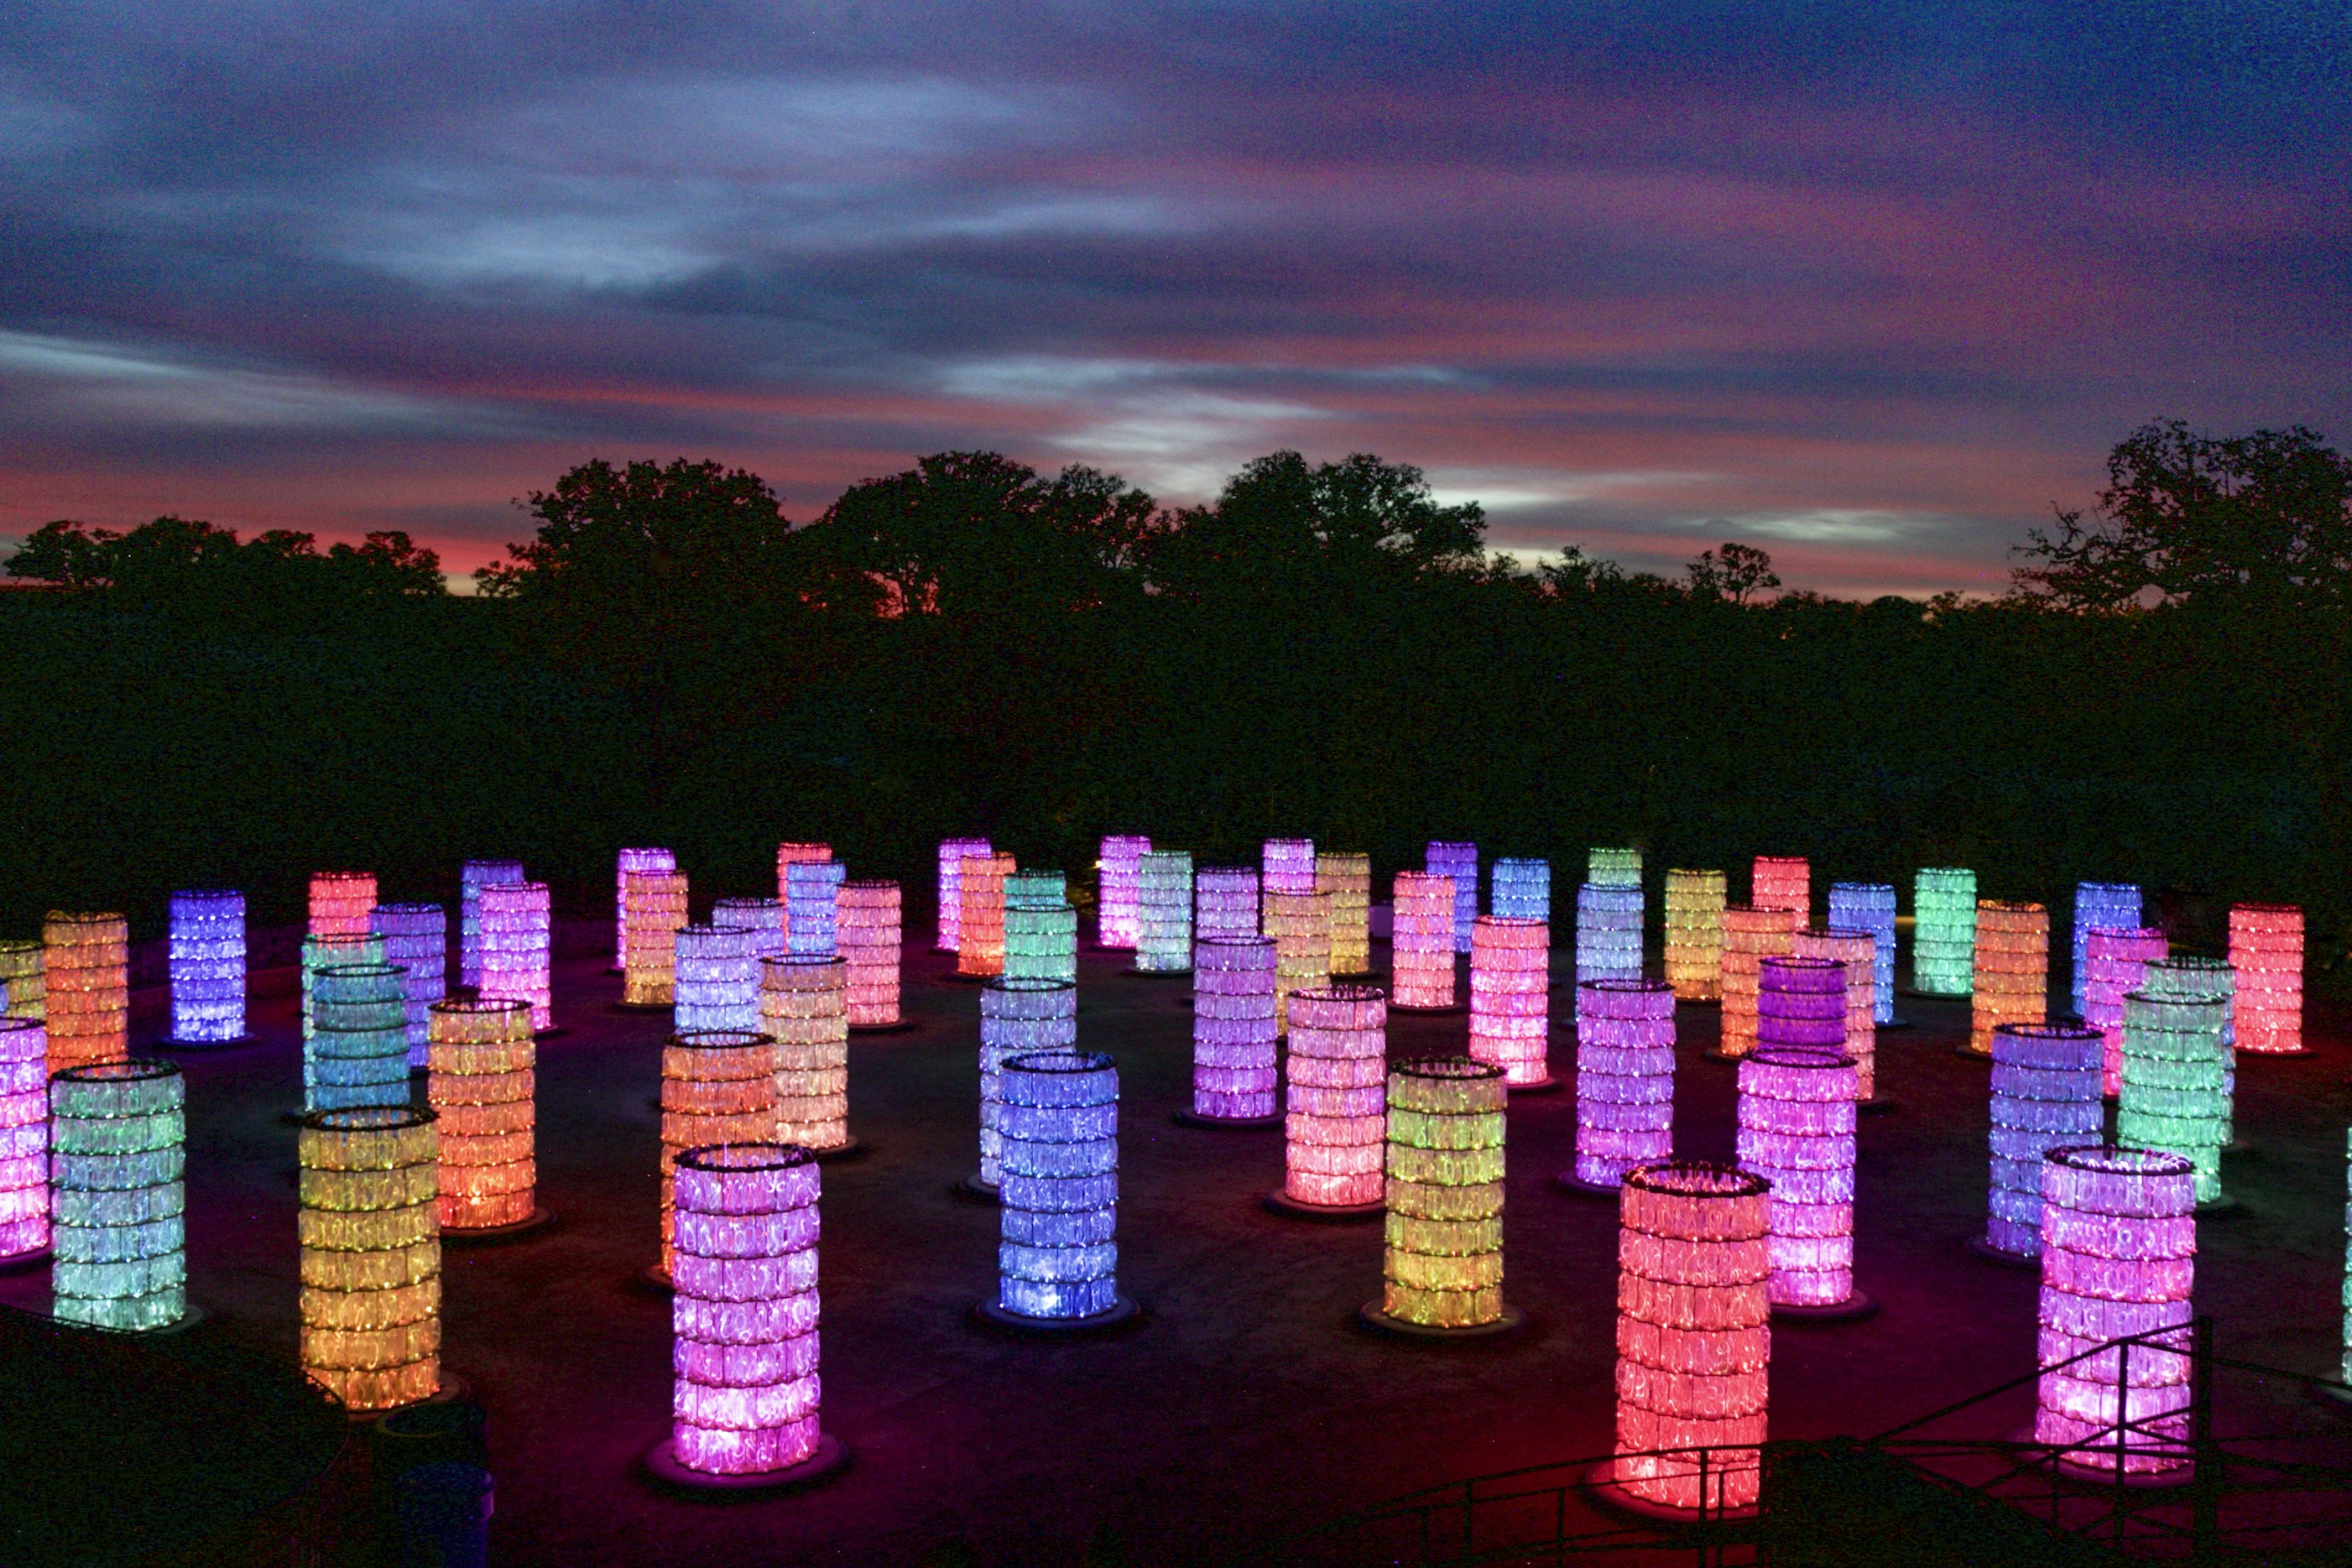 The new “Light-Towers” installation by Bruce Munro, Uluru, Northern Territory, Australia